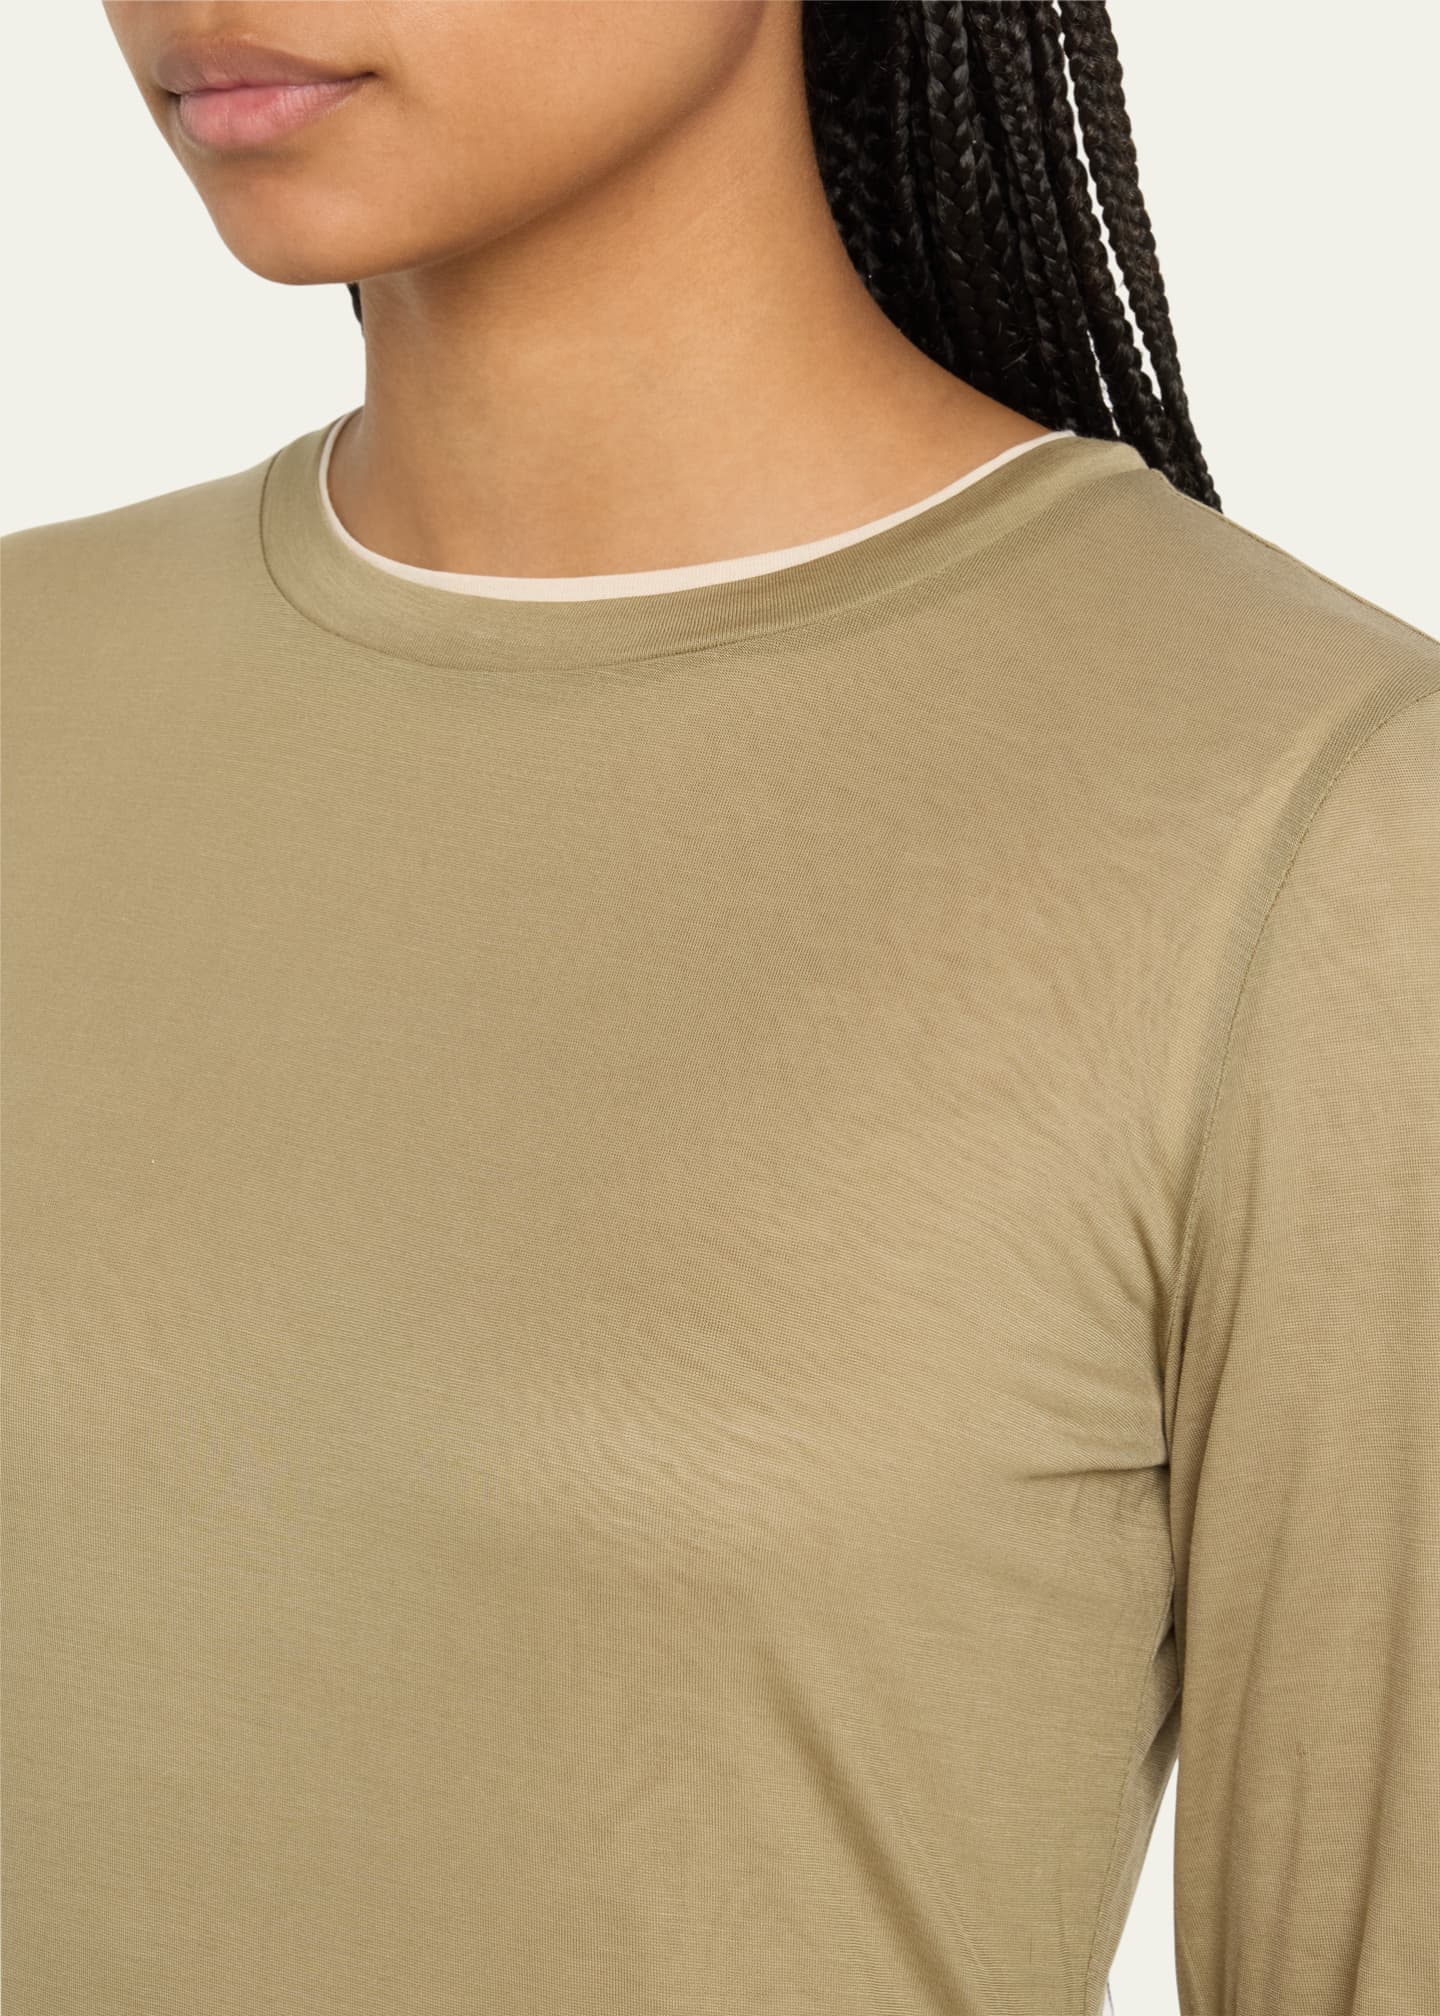 Vince Double-Layer Long-Sleeve Cotton T-Shirt - Bergdorf Goodman